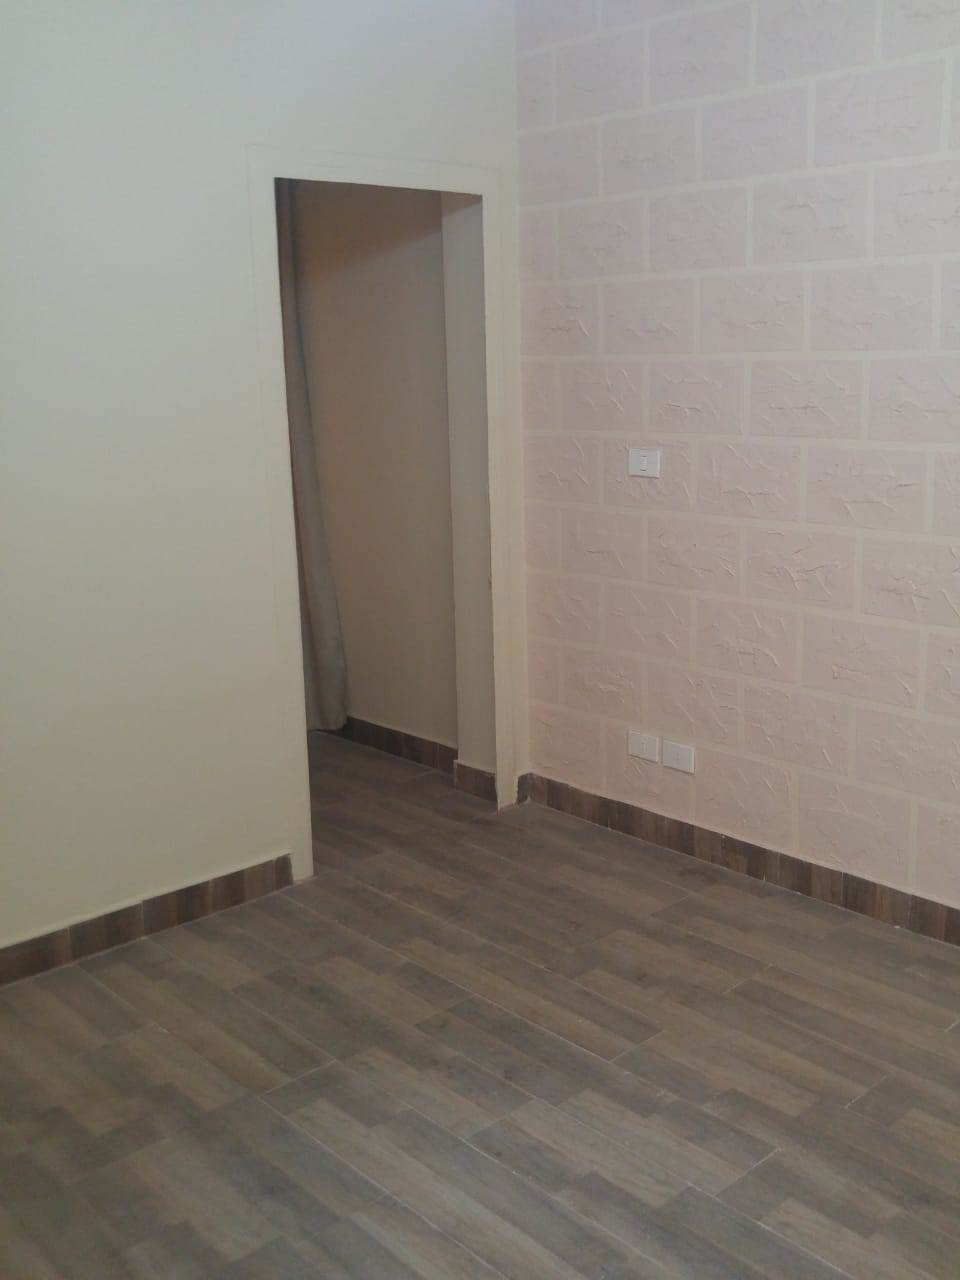 (Rehab Apartment001) شقة للبيع بالرحاب 74 م تشطيب سوبر لوكس بسعر ممتاز . 